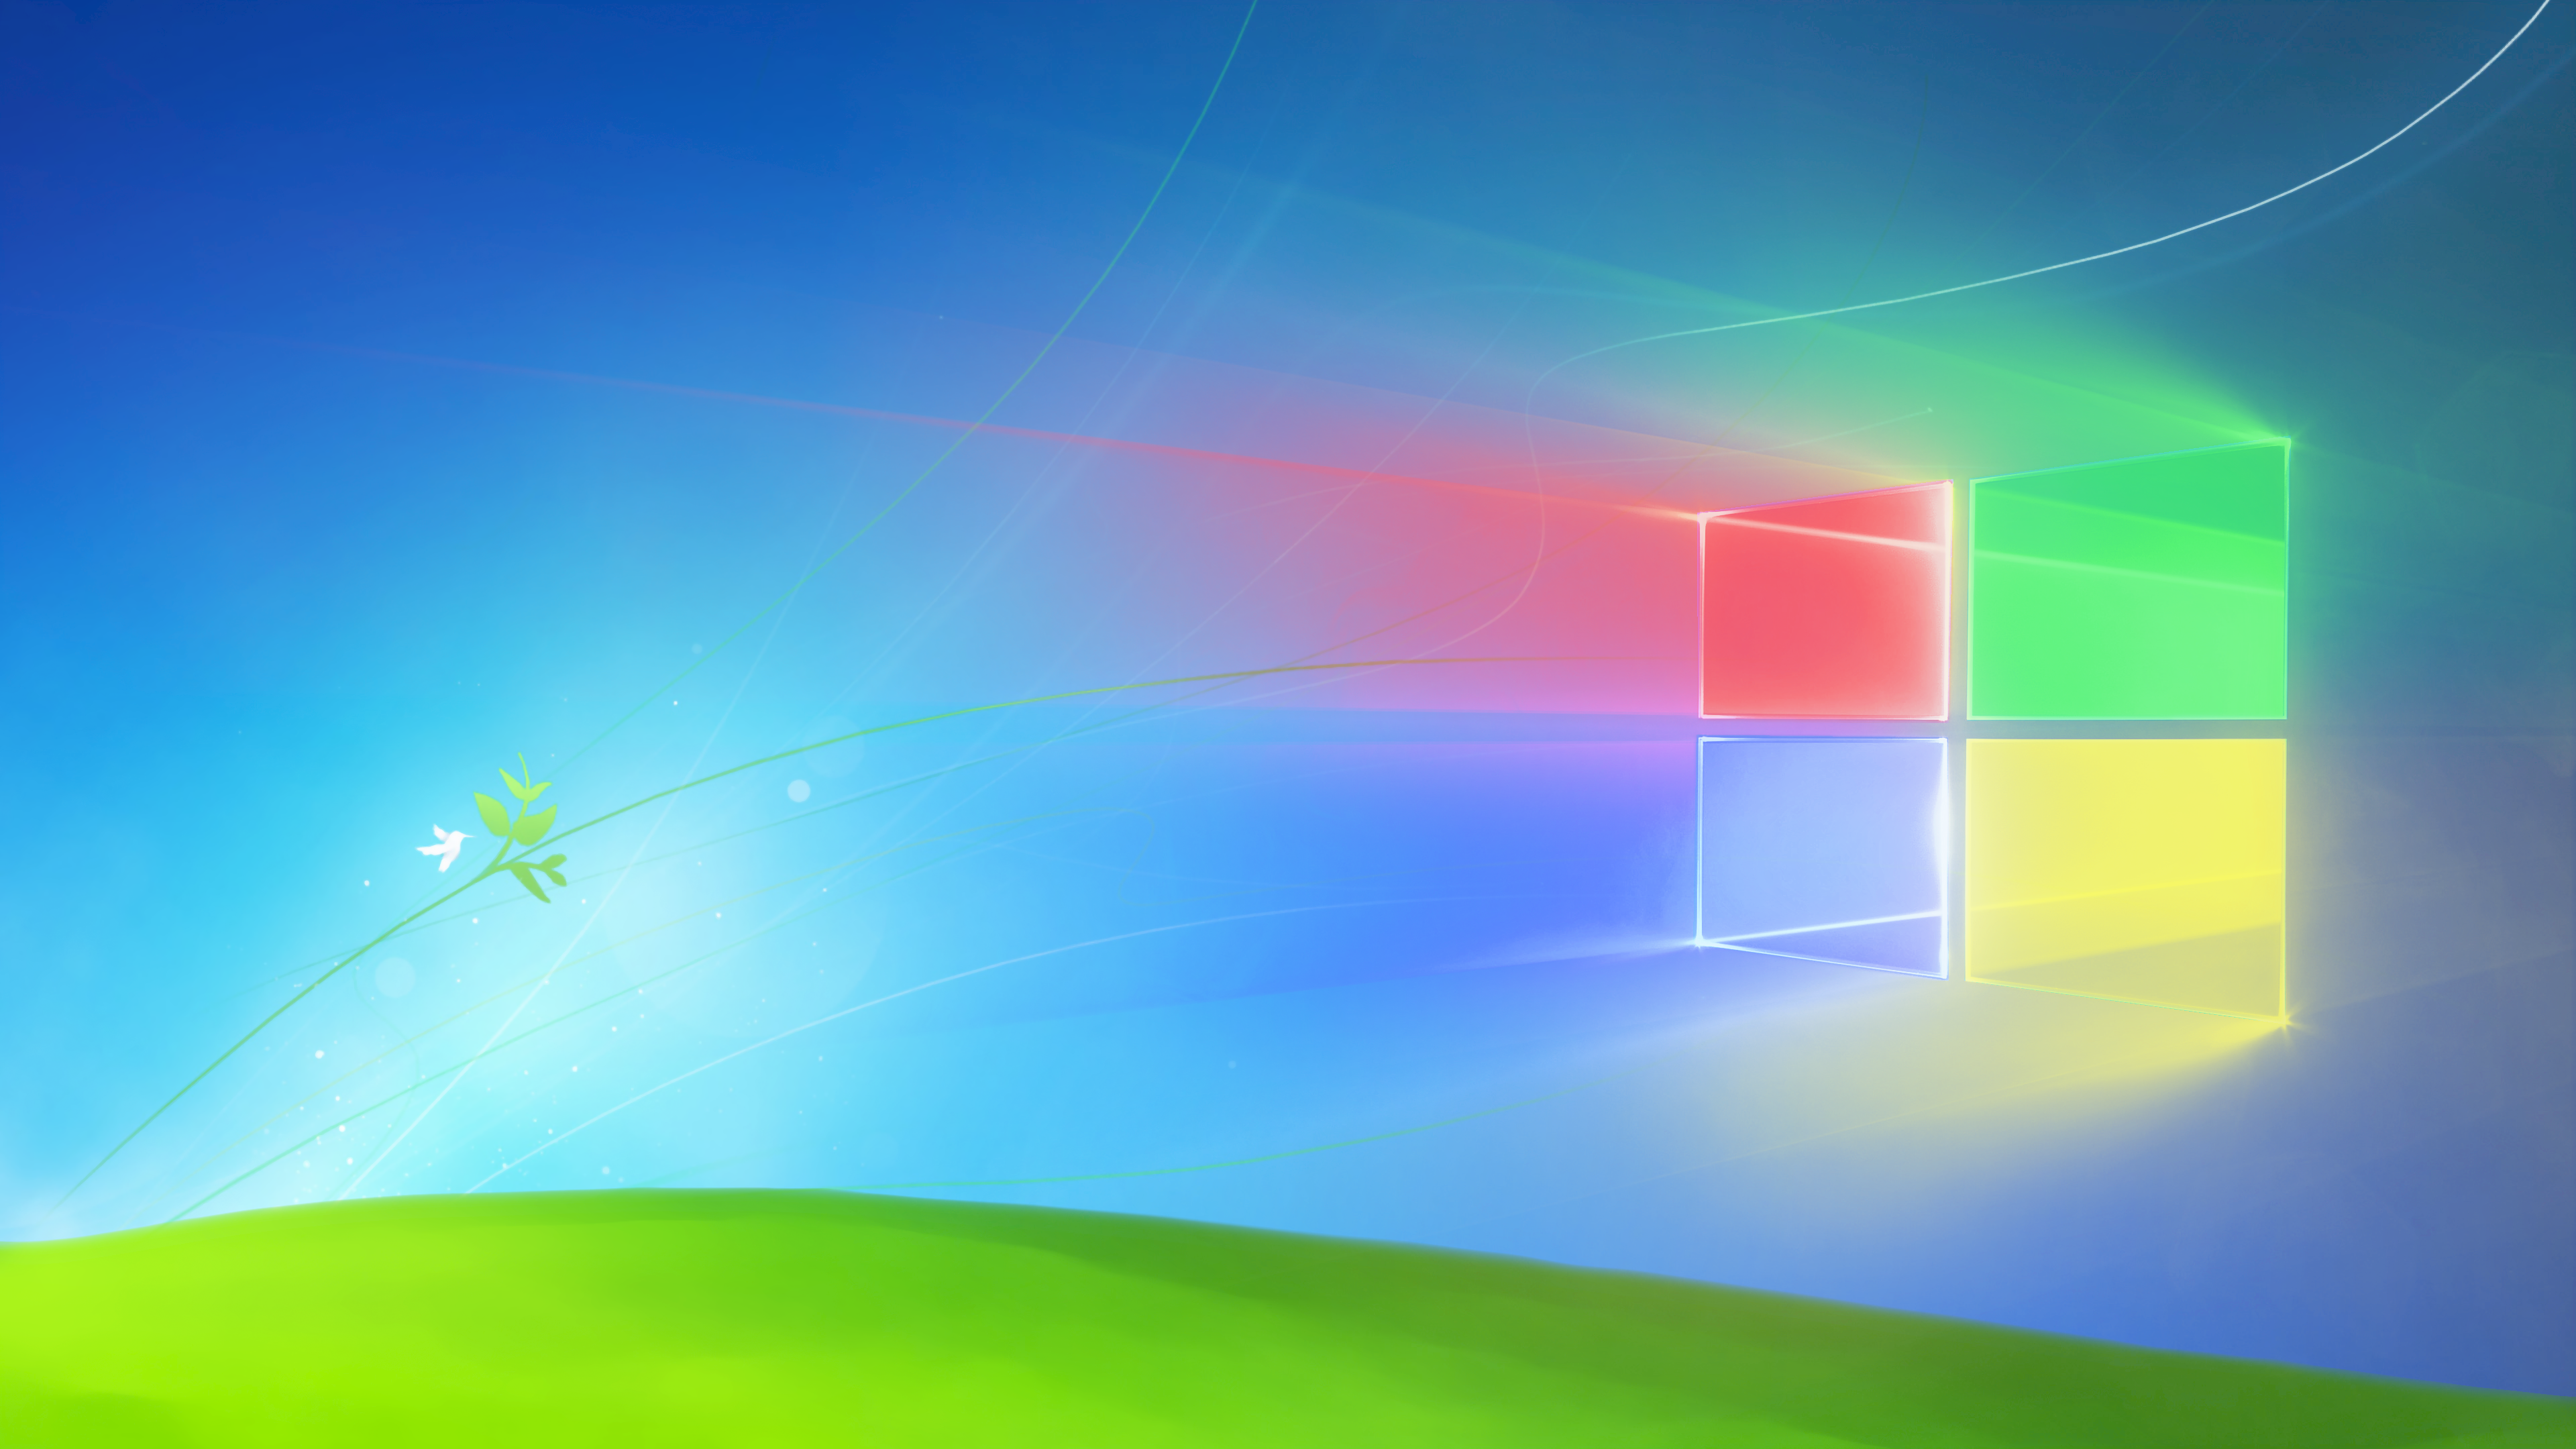 General 3840x2160 Windows 10 Windows Vista operating system technology Windows 7 Windows 8 glass design Microsoft Microsoft Windows logo bliss digital art